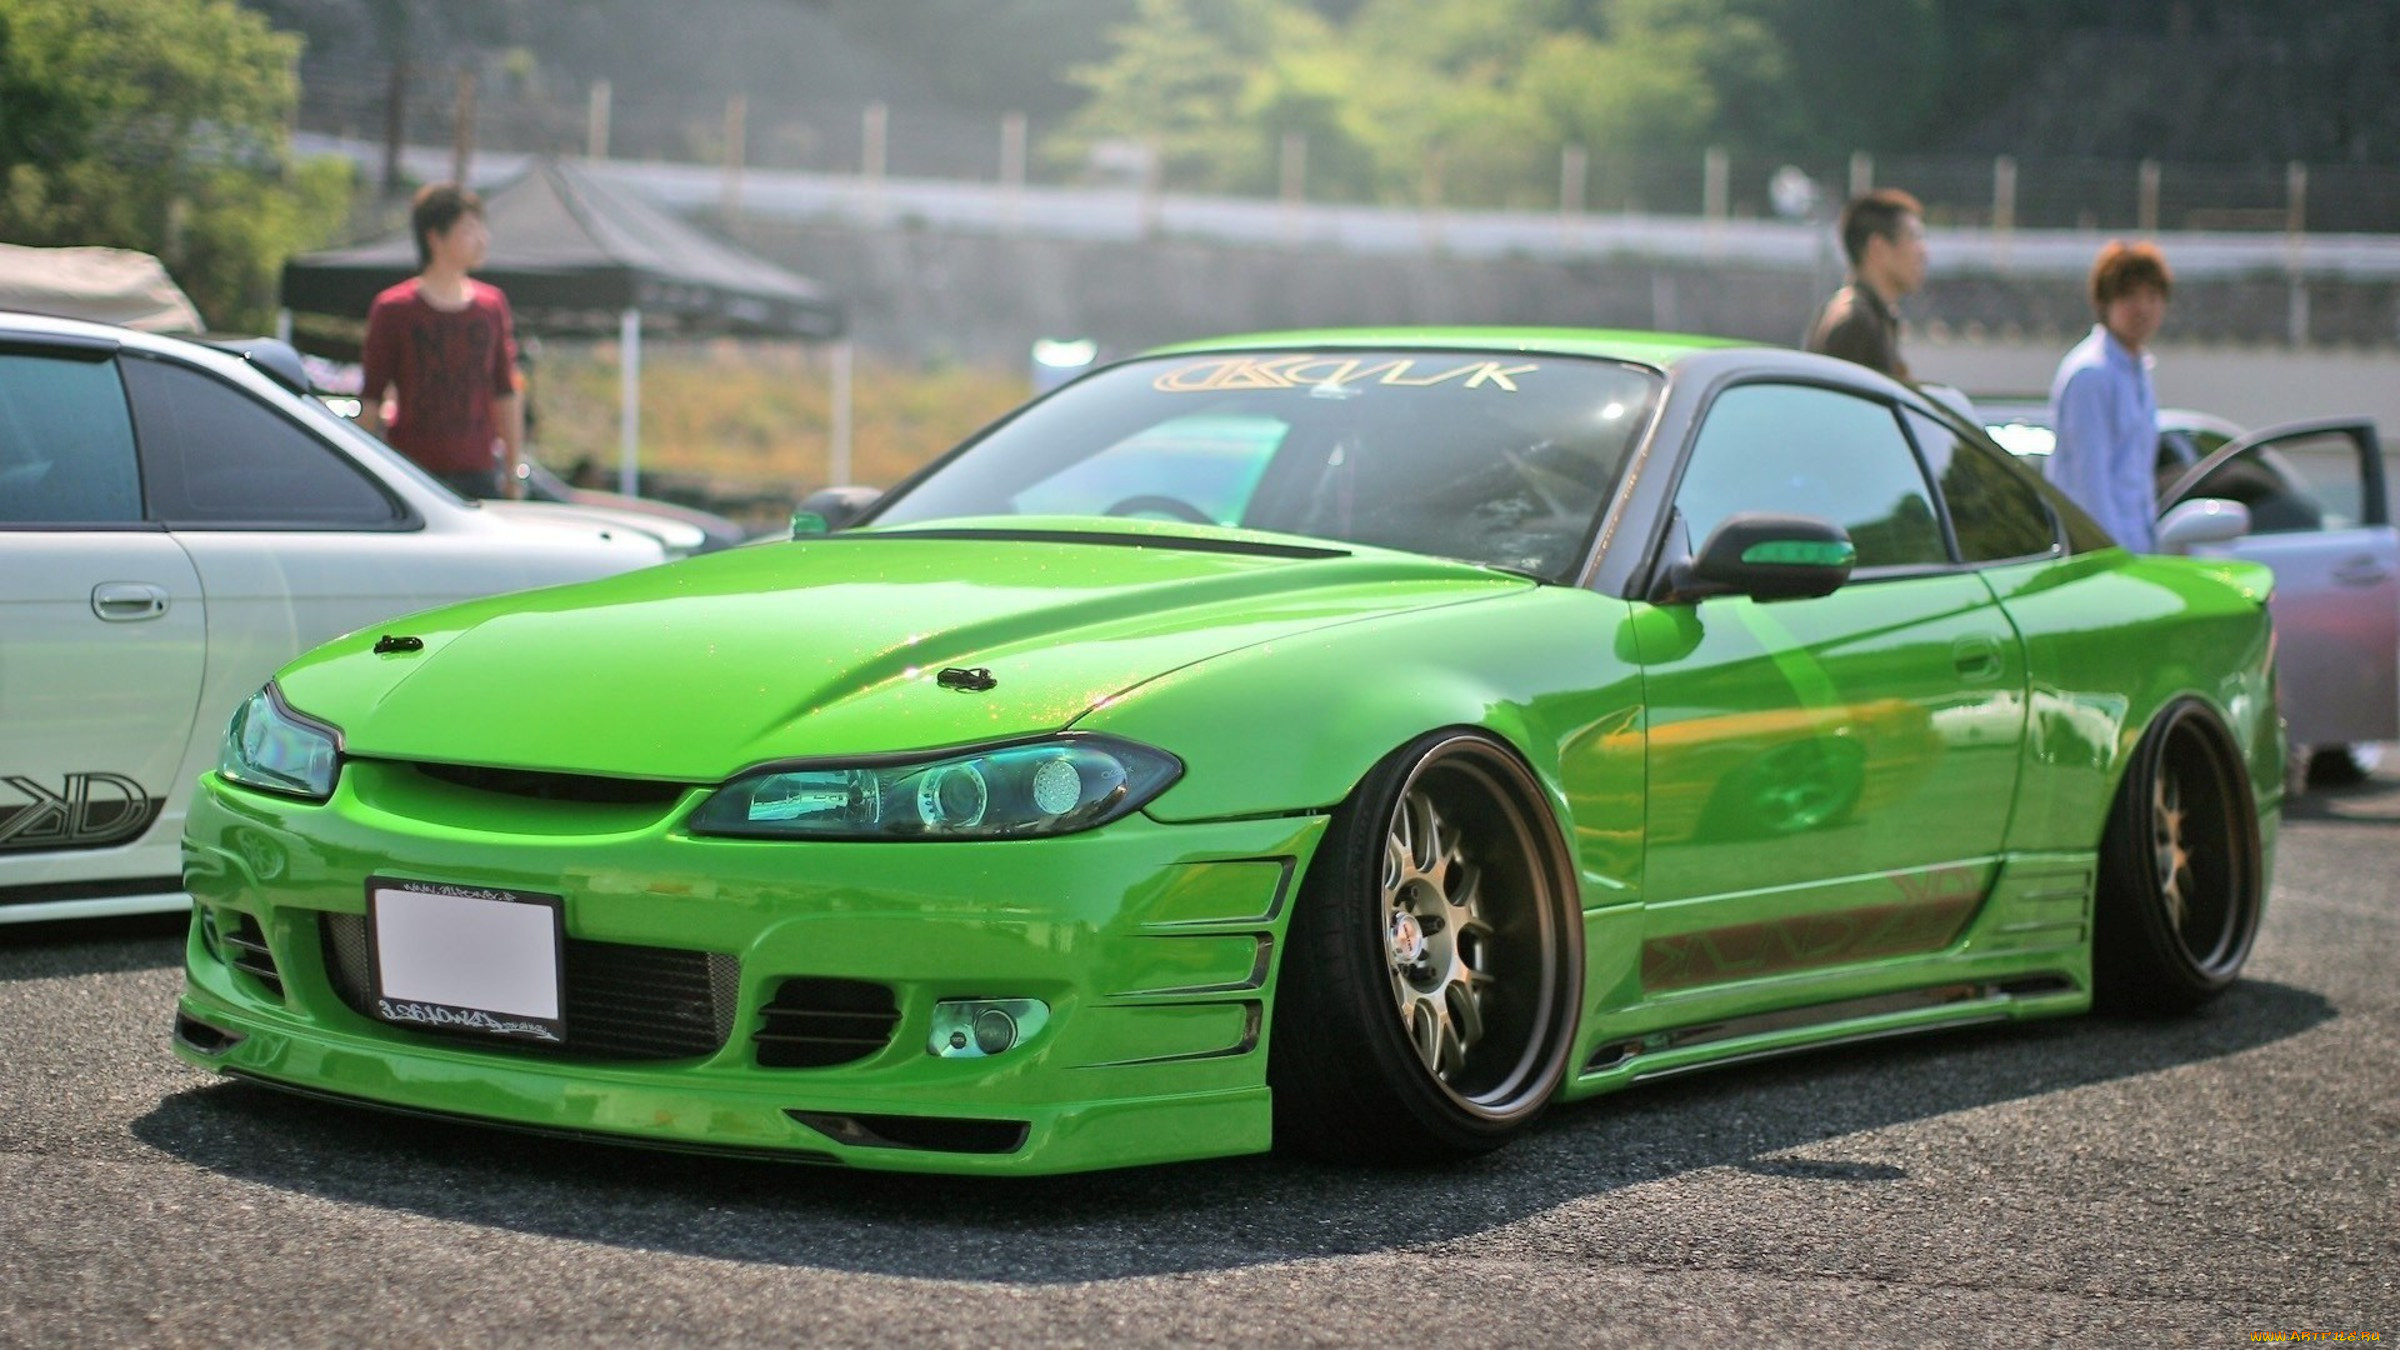 Silvia s15 купить. Nissan Silvia s15. Nissan Silvia s15 Green. Nissan Silvia s15 зеленая.